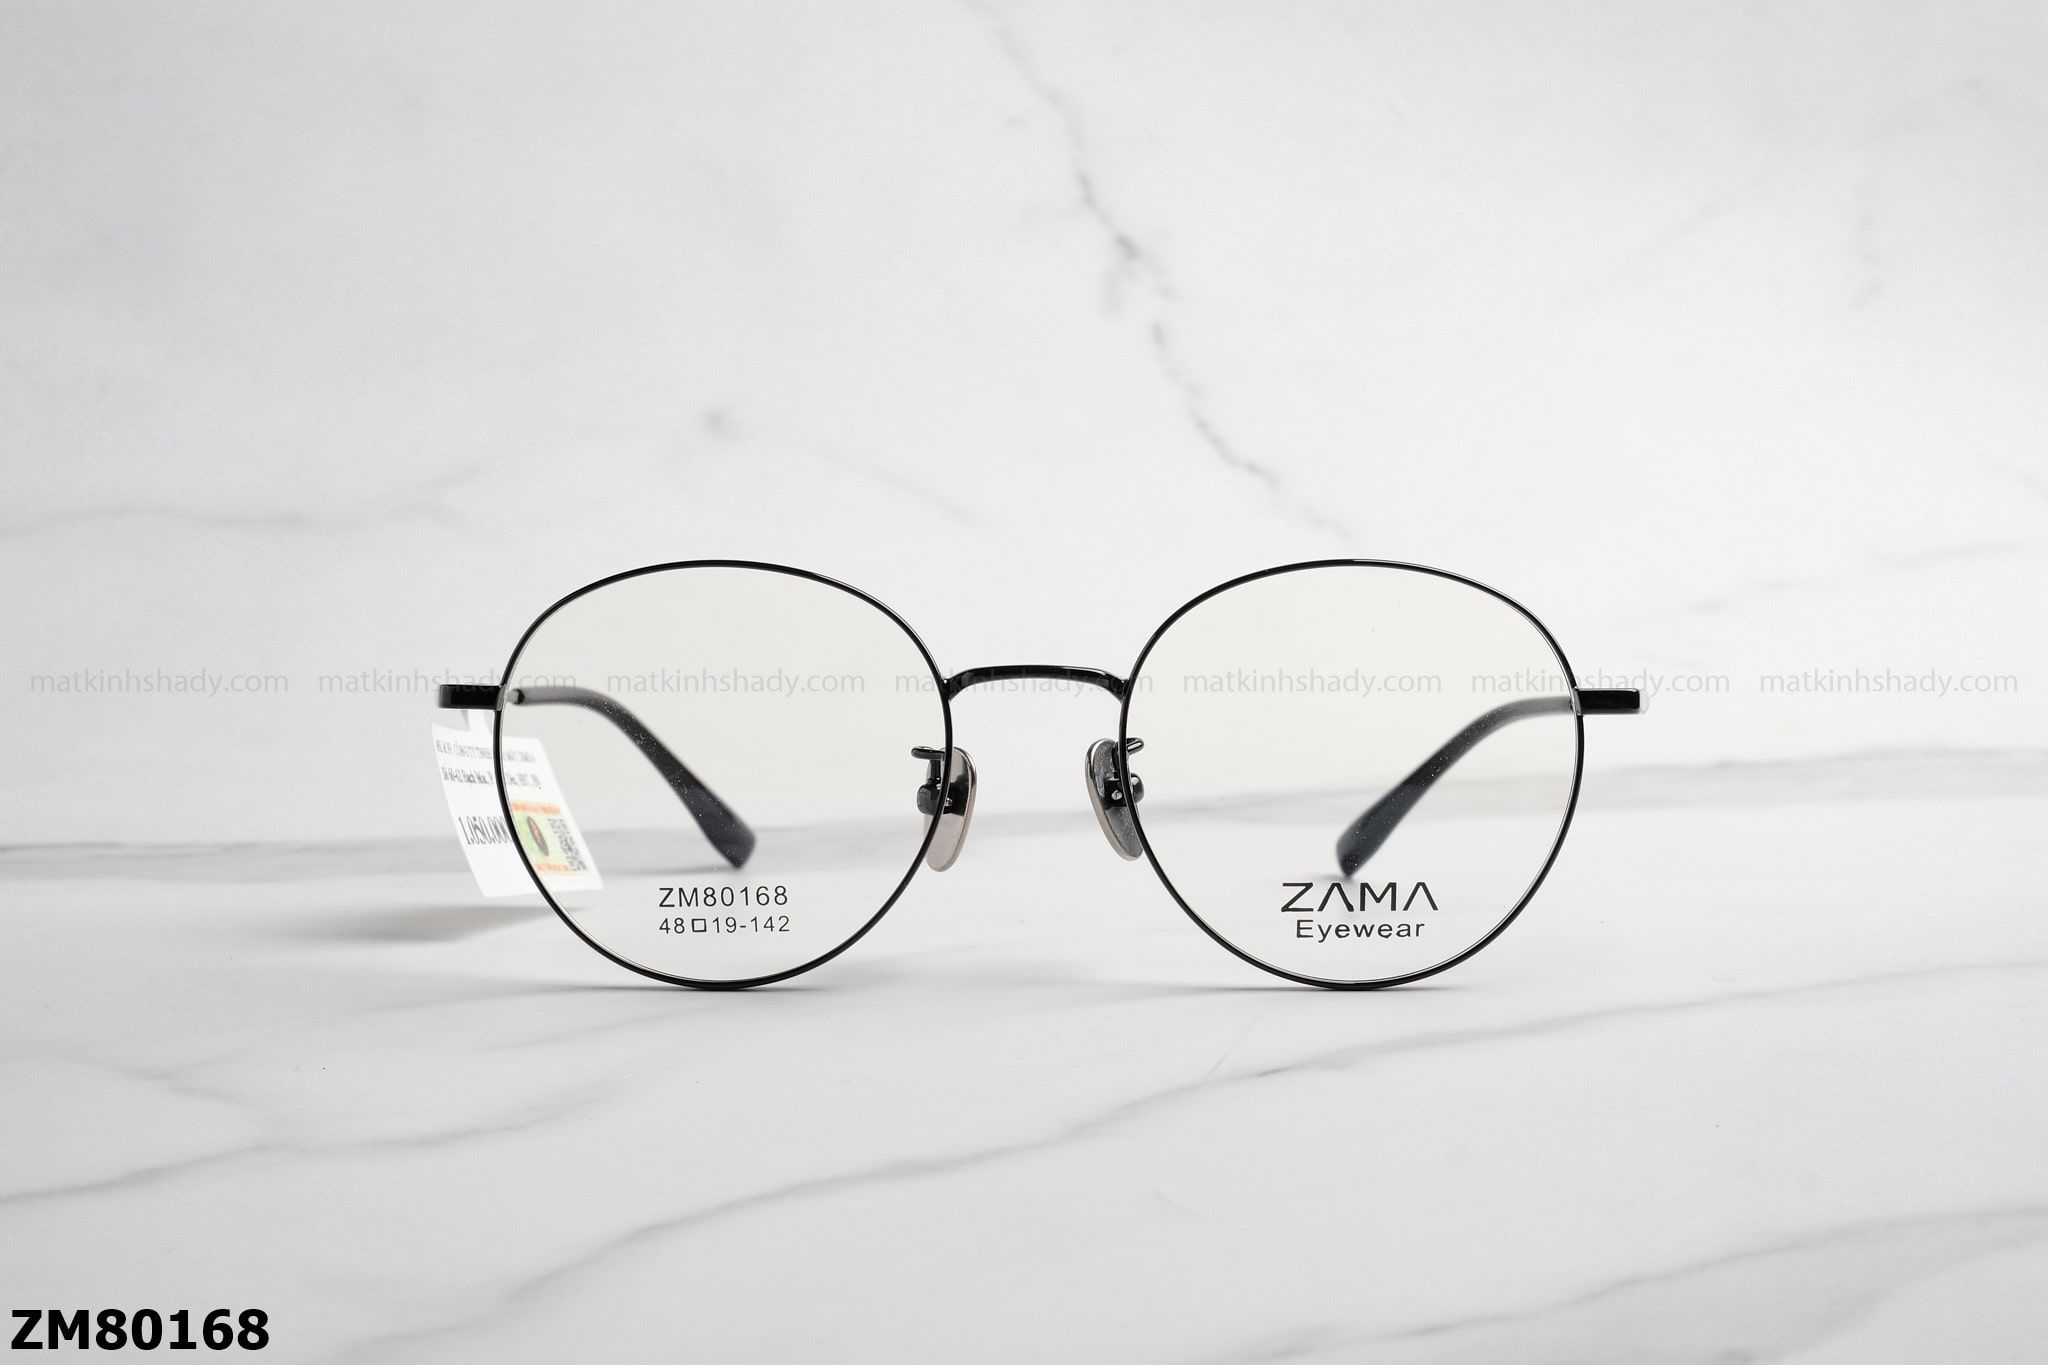  ZAMA Eyewear - Glasses - ZM80168 